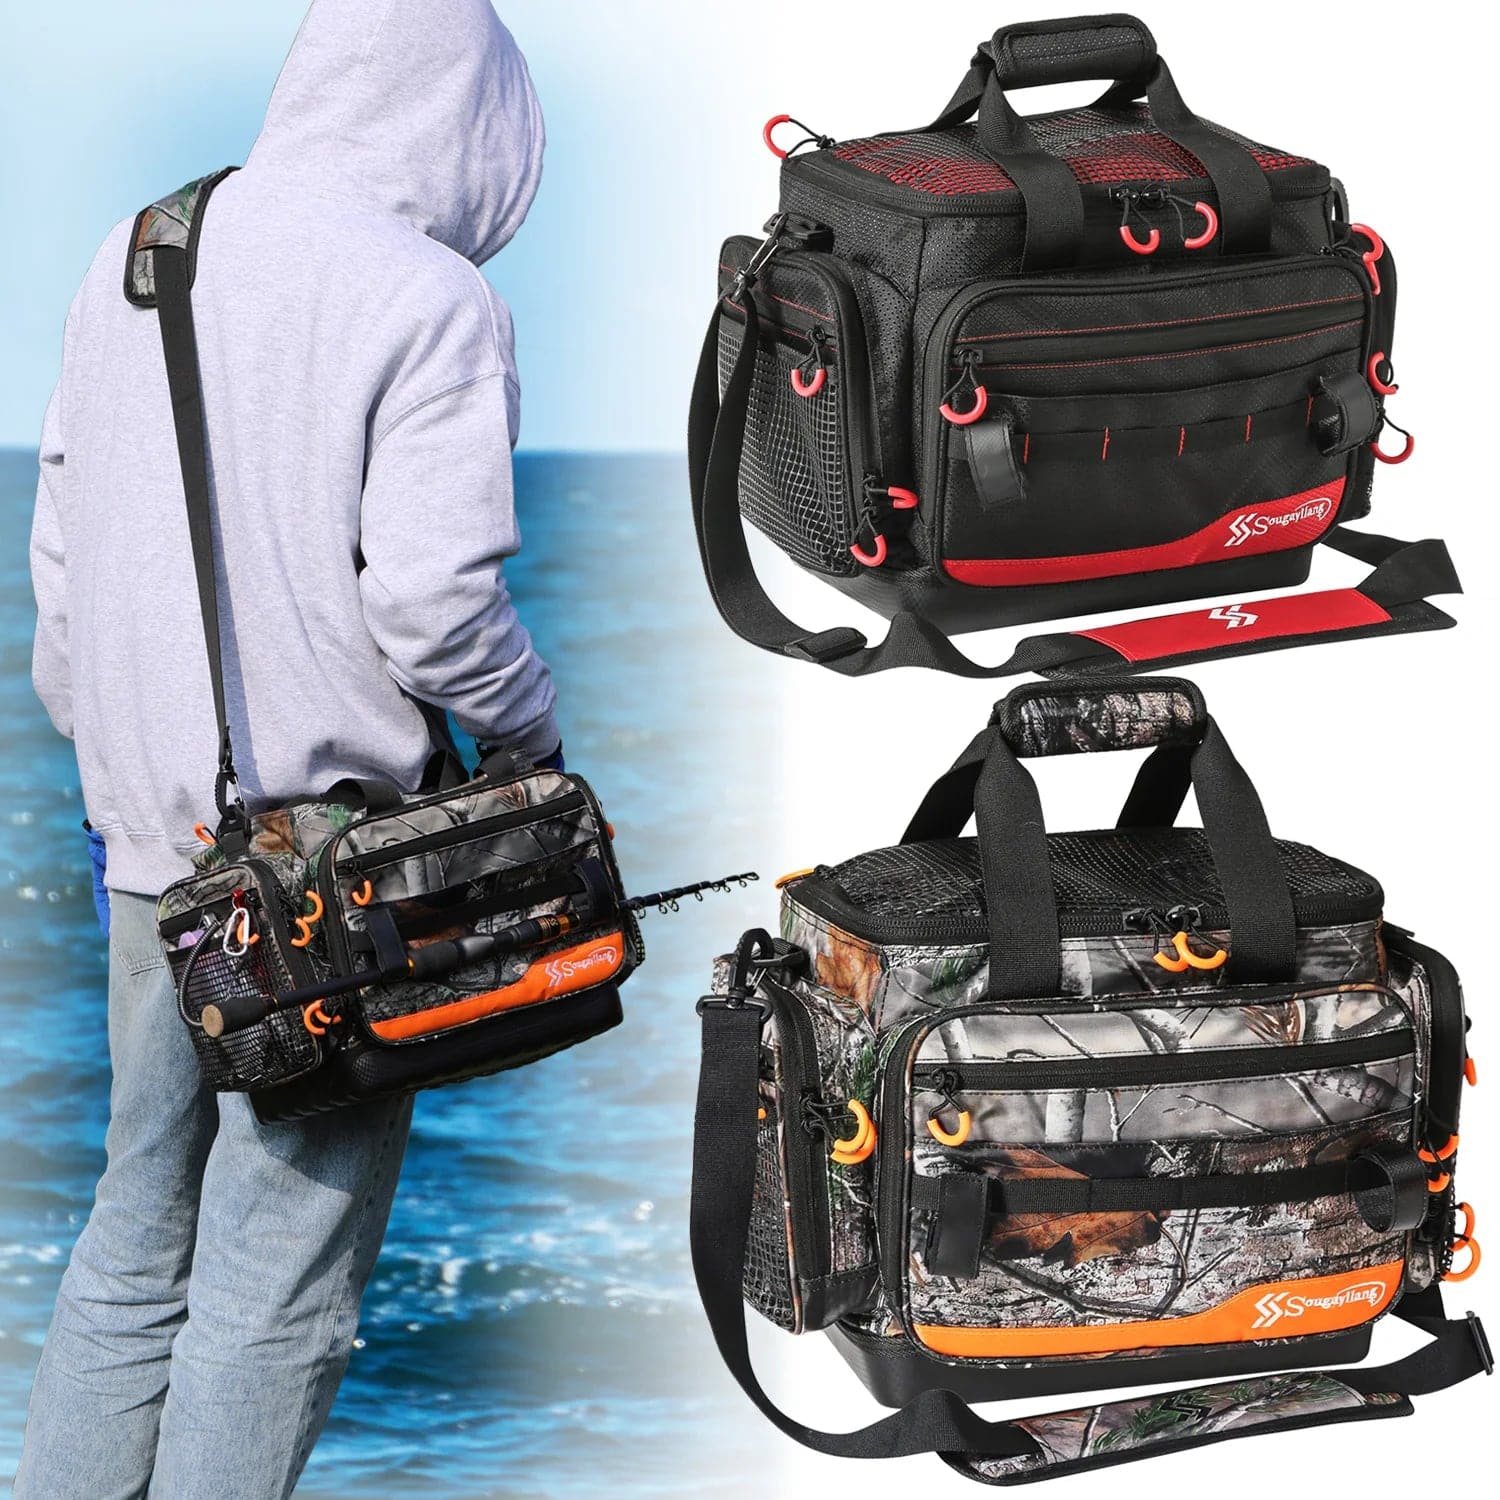 Large Capacity Waterproof Fishing Tackle Bag - Durable, Multi-Purpose Storage - Betatton - 